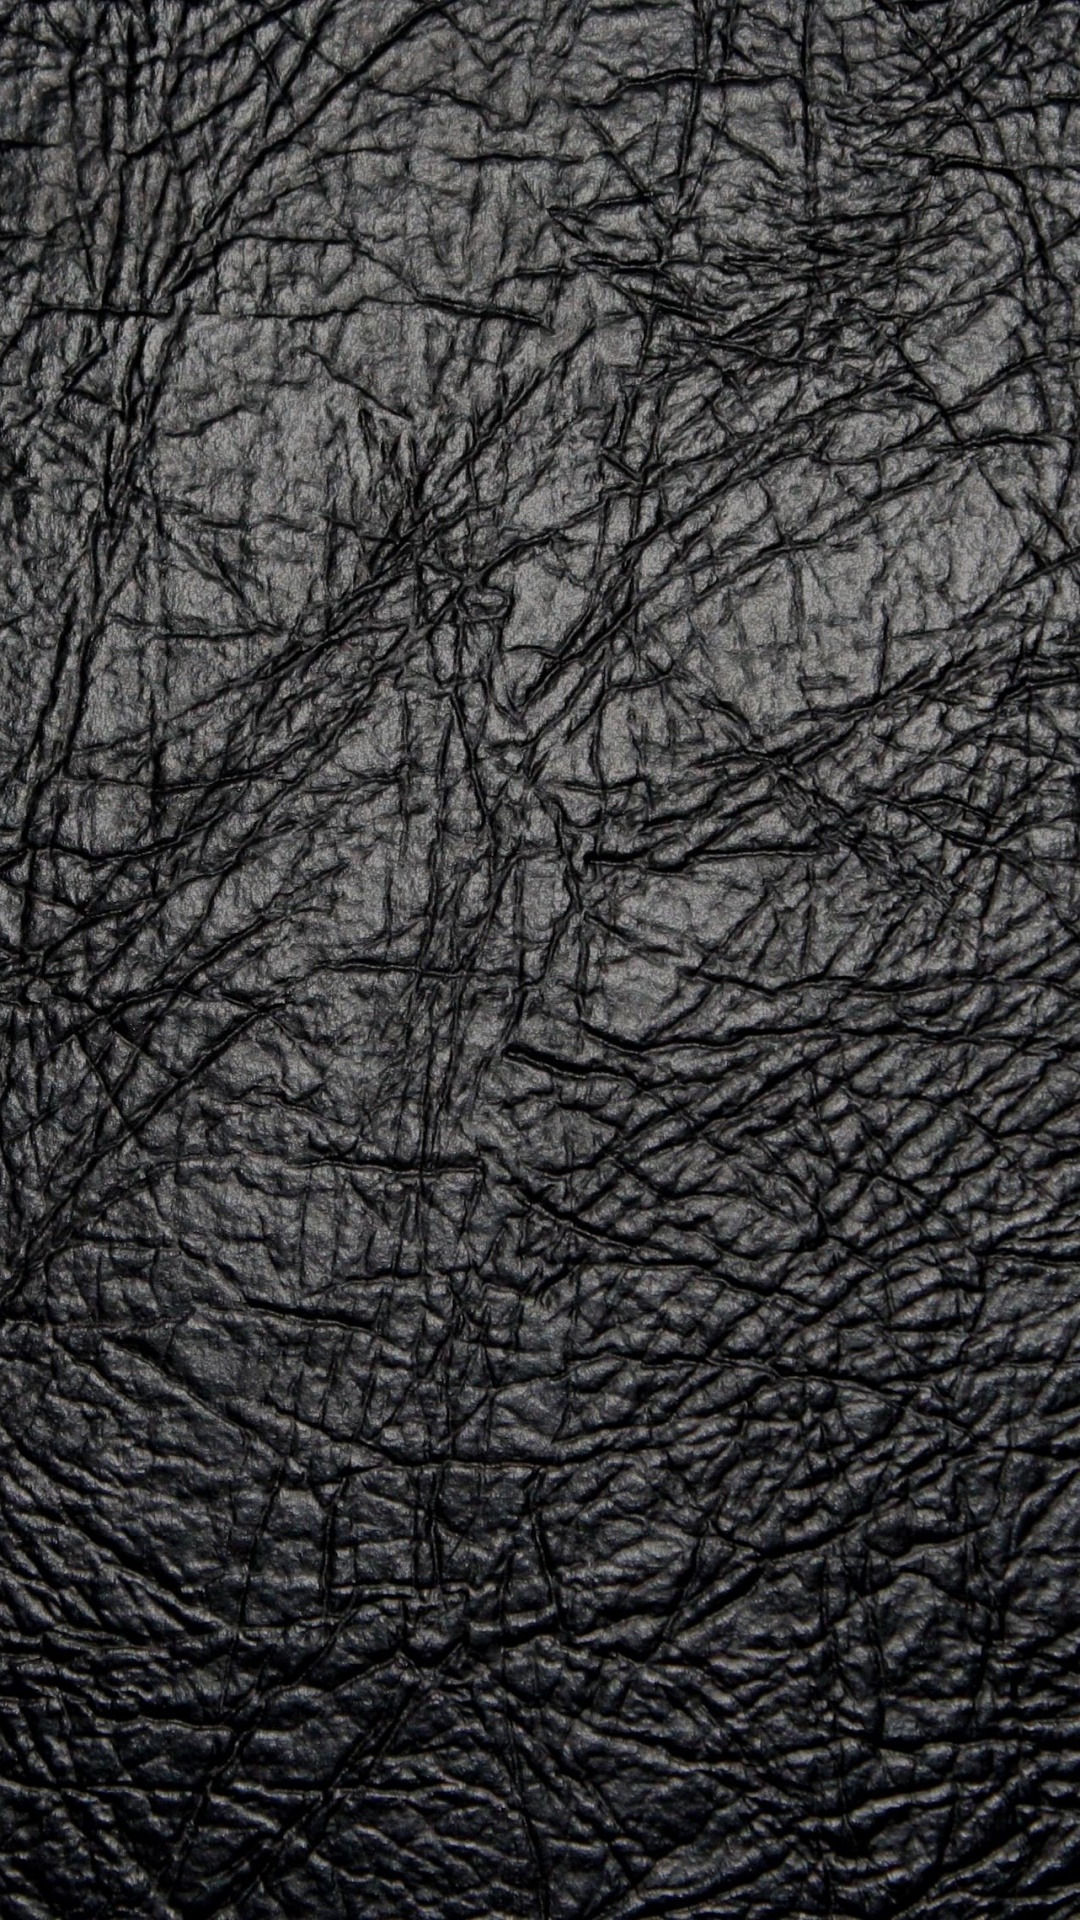 Textile en Cuir Noir en Gros Plan. Wallpaper in 1080x1920 Resolution